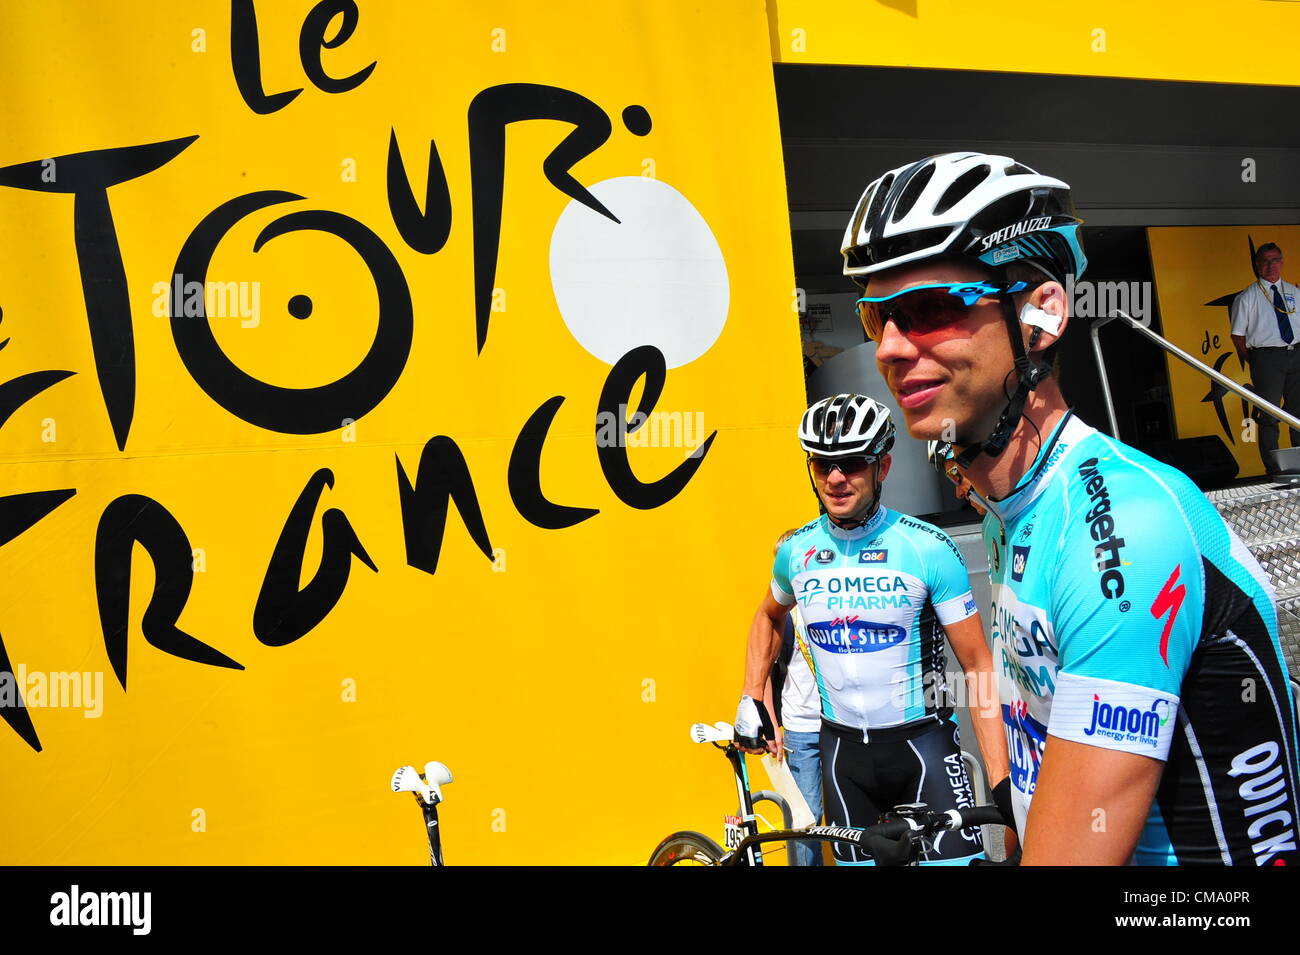 01.07.2012. Tour de France, Liega, Seraing. Stufe 1.  Omega Pharma - Quick Step 2012 Martin Tony, Grabsch Bert, Liegi Stockfoto